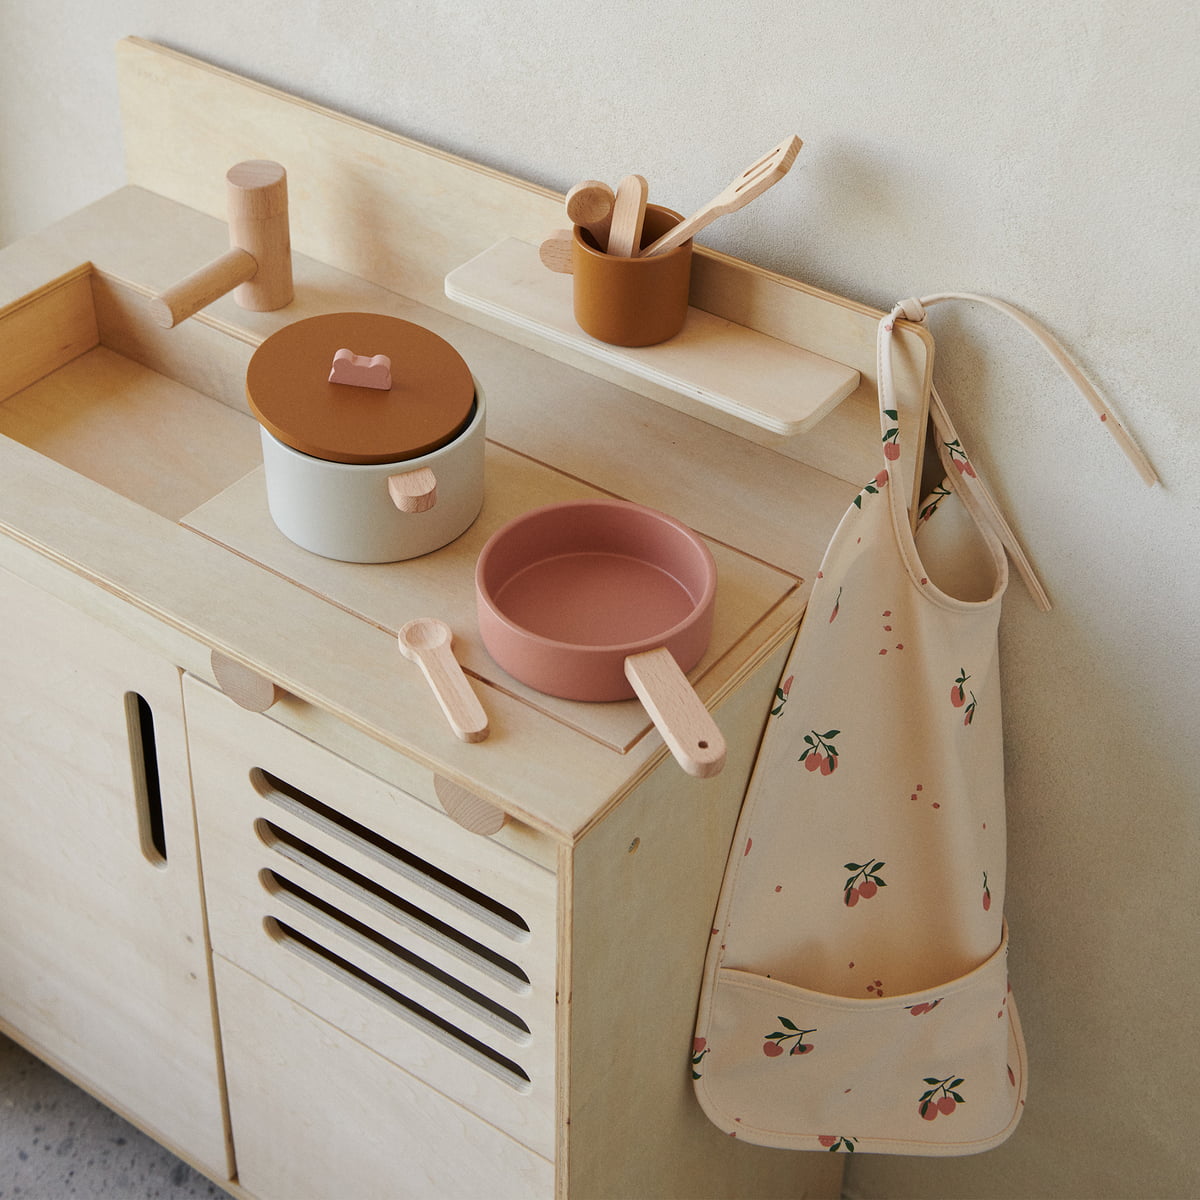 MIDMINI Montessori Wooden Play Kitchen - Natural